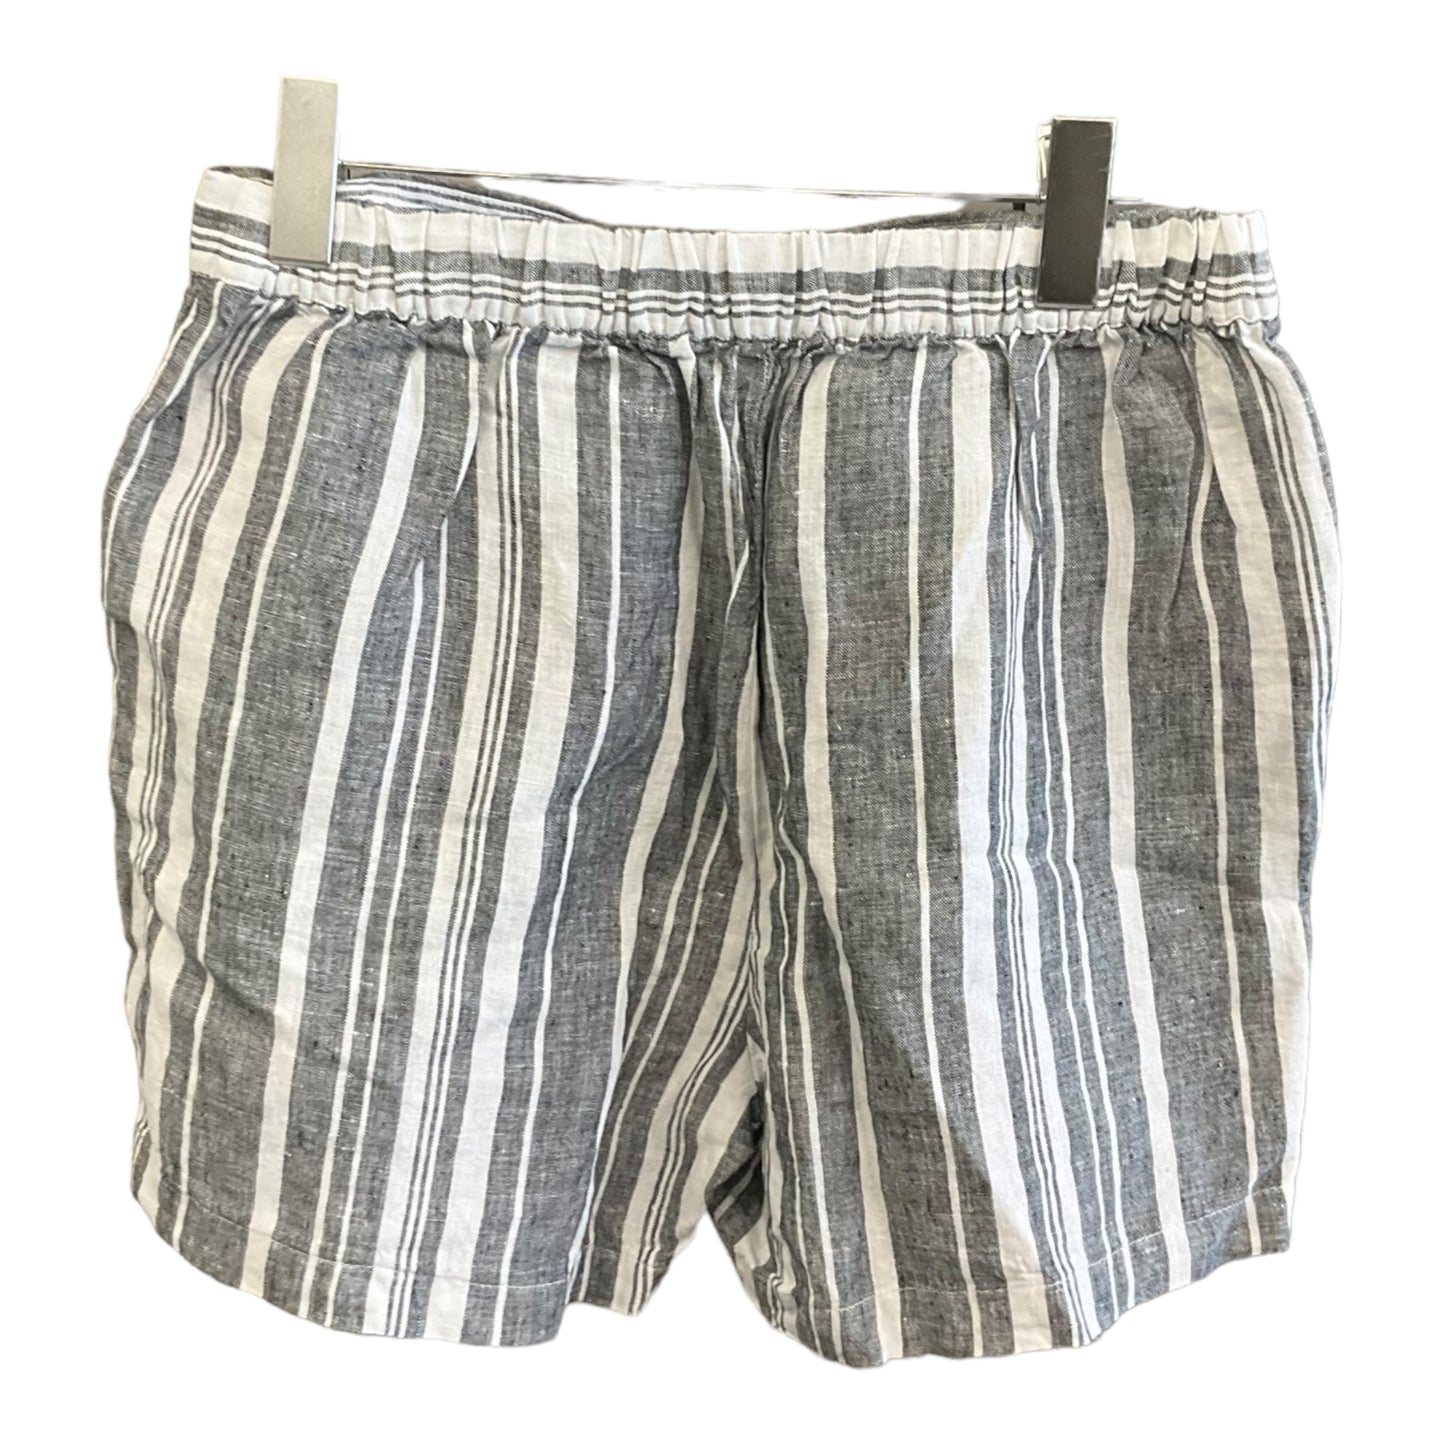 Shorts By Ellen Tracy  Size: S